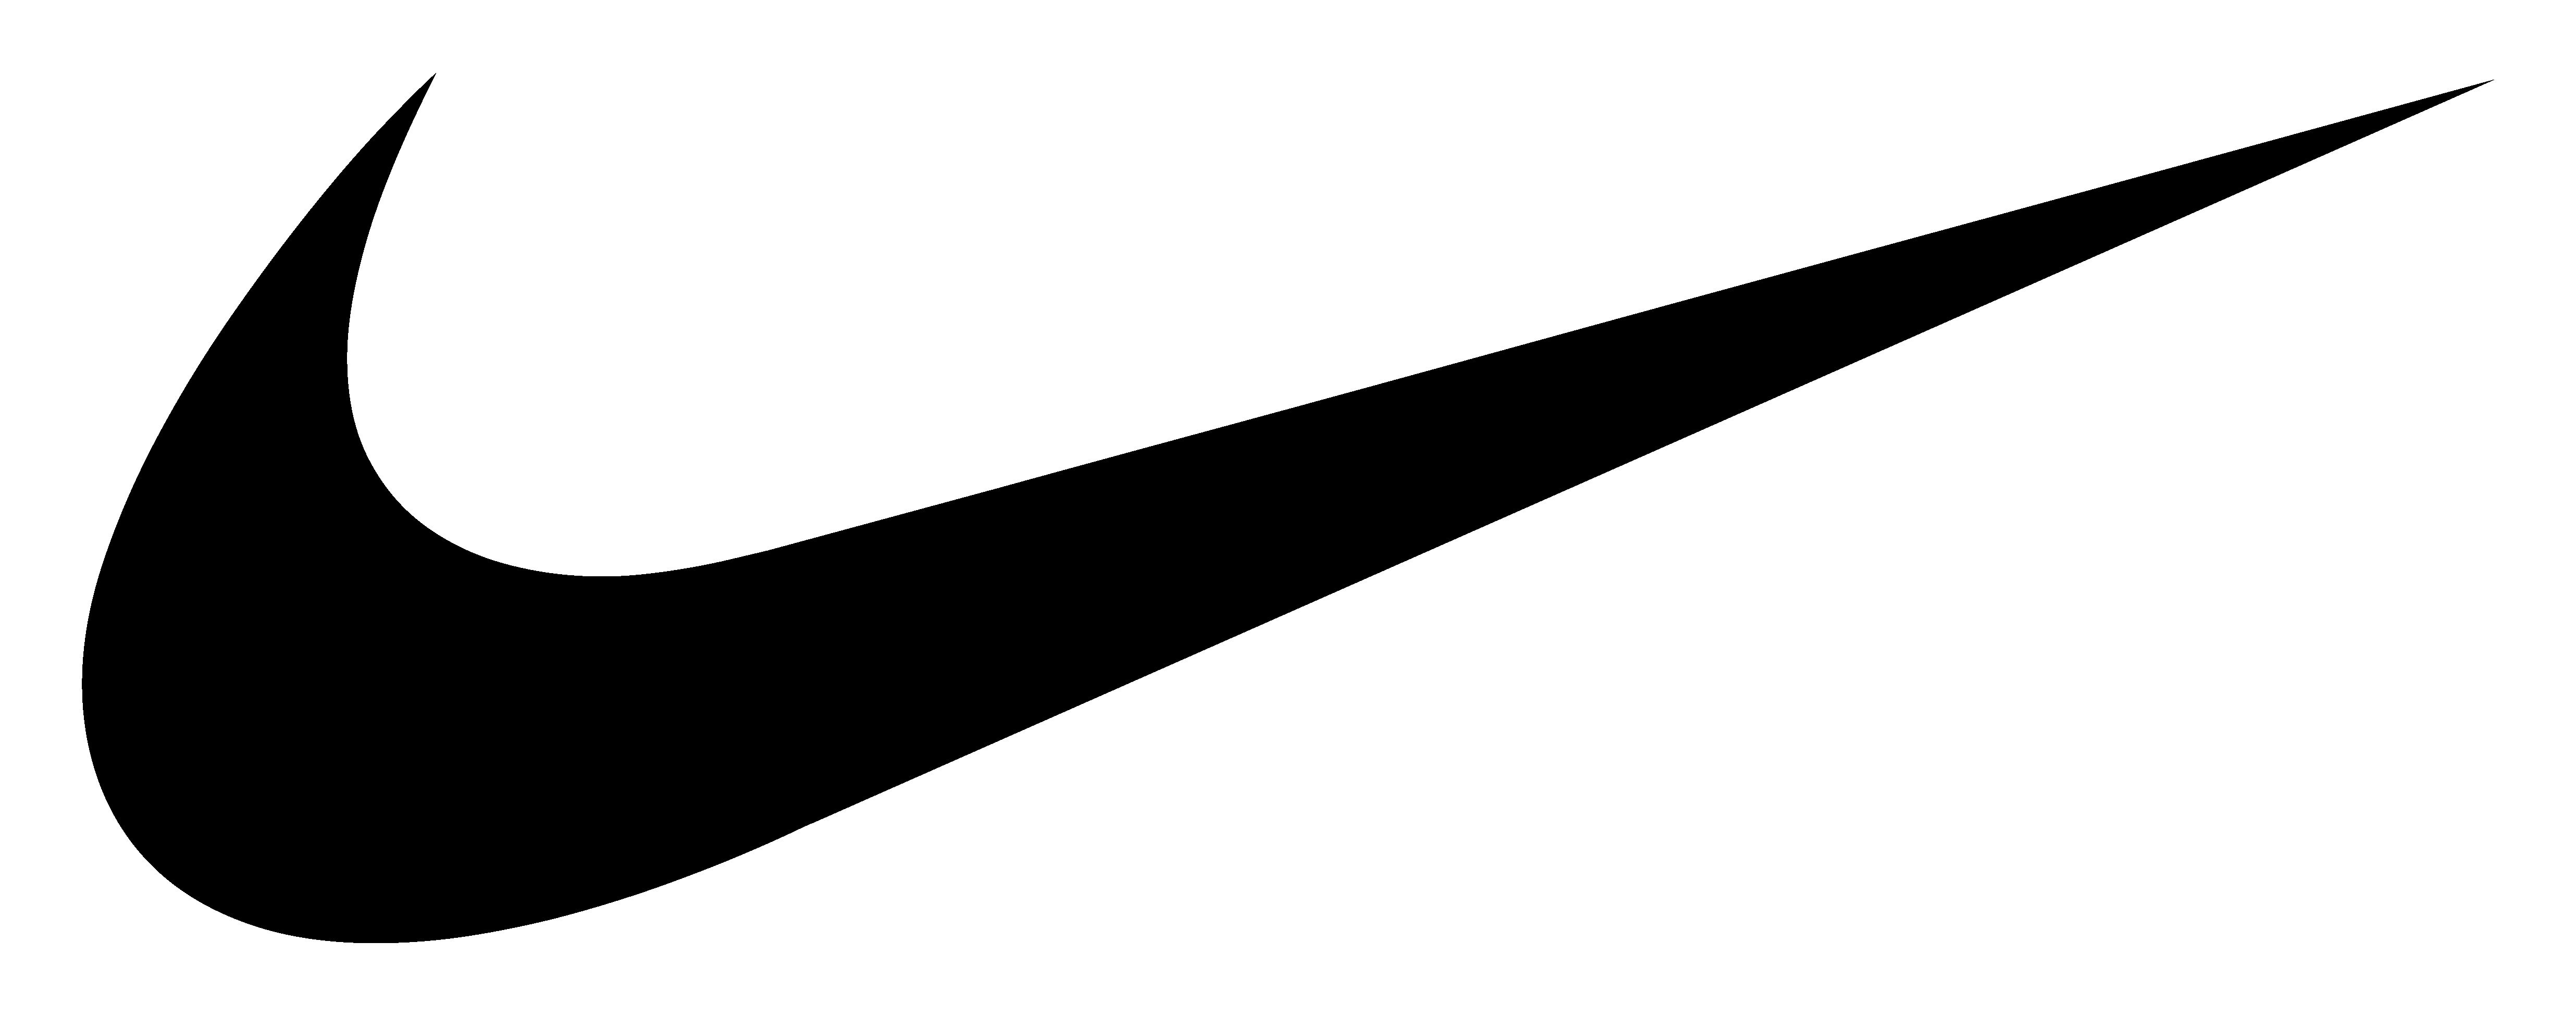 Nike Logo Shoes Brand PNG Transparent Background, Free Download #49337